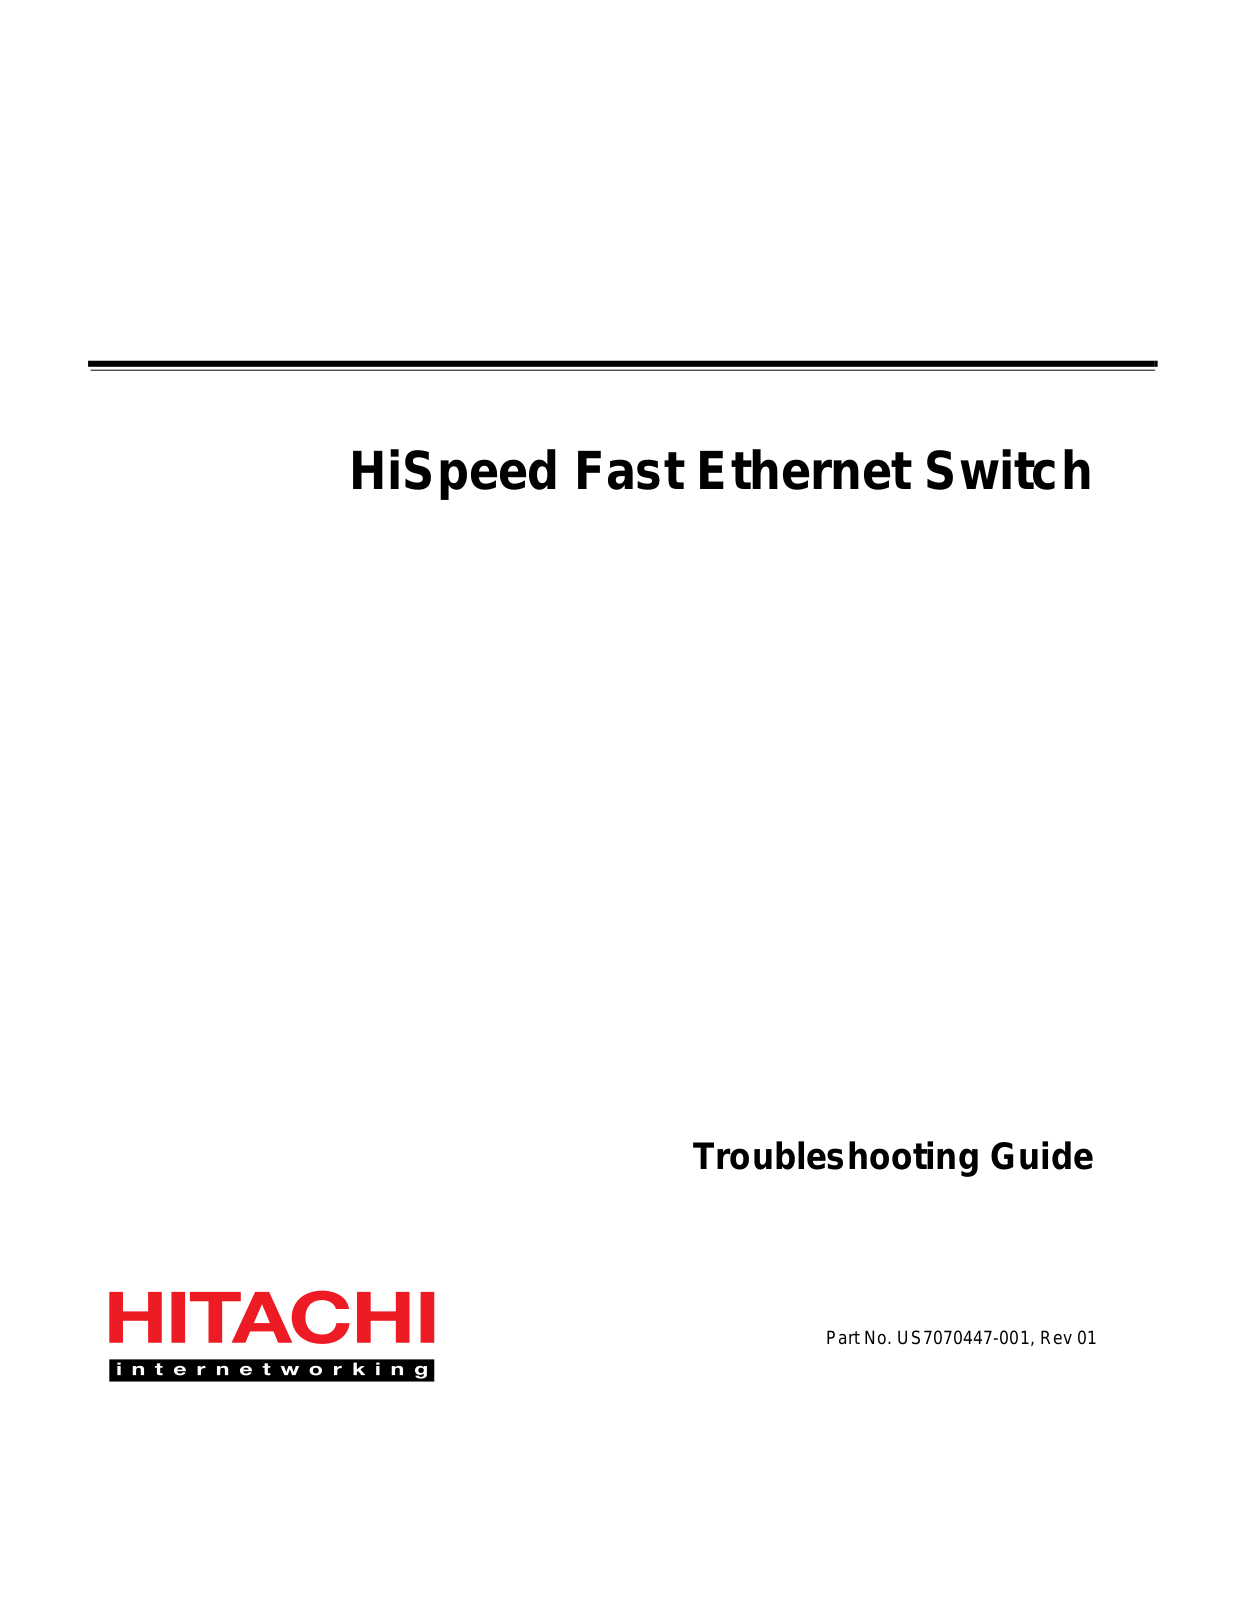 Hitachi US7070447-001 User Manual